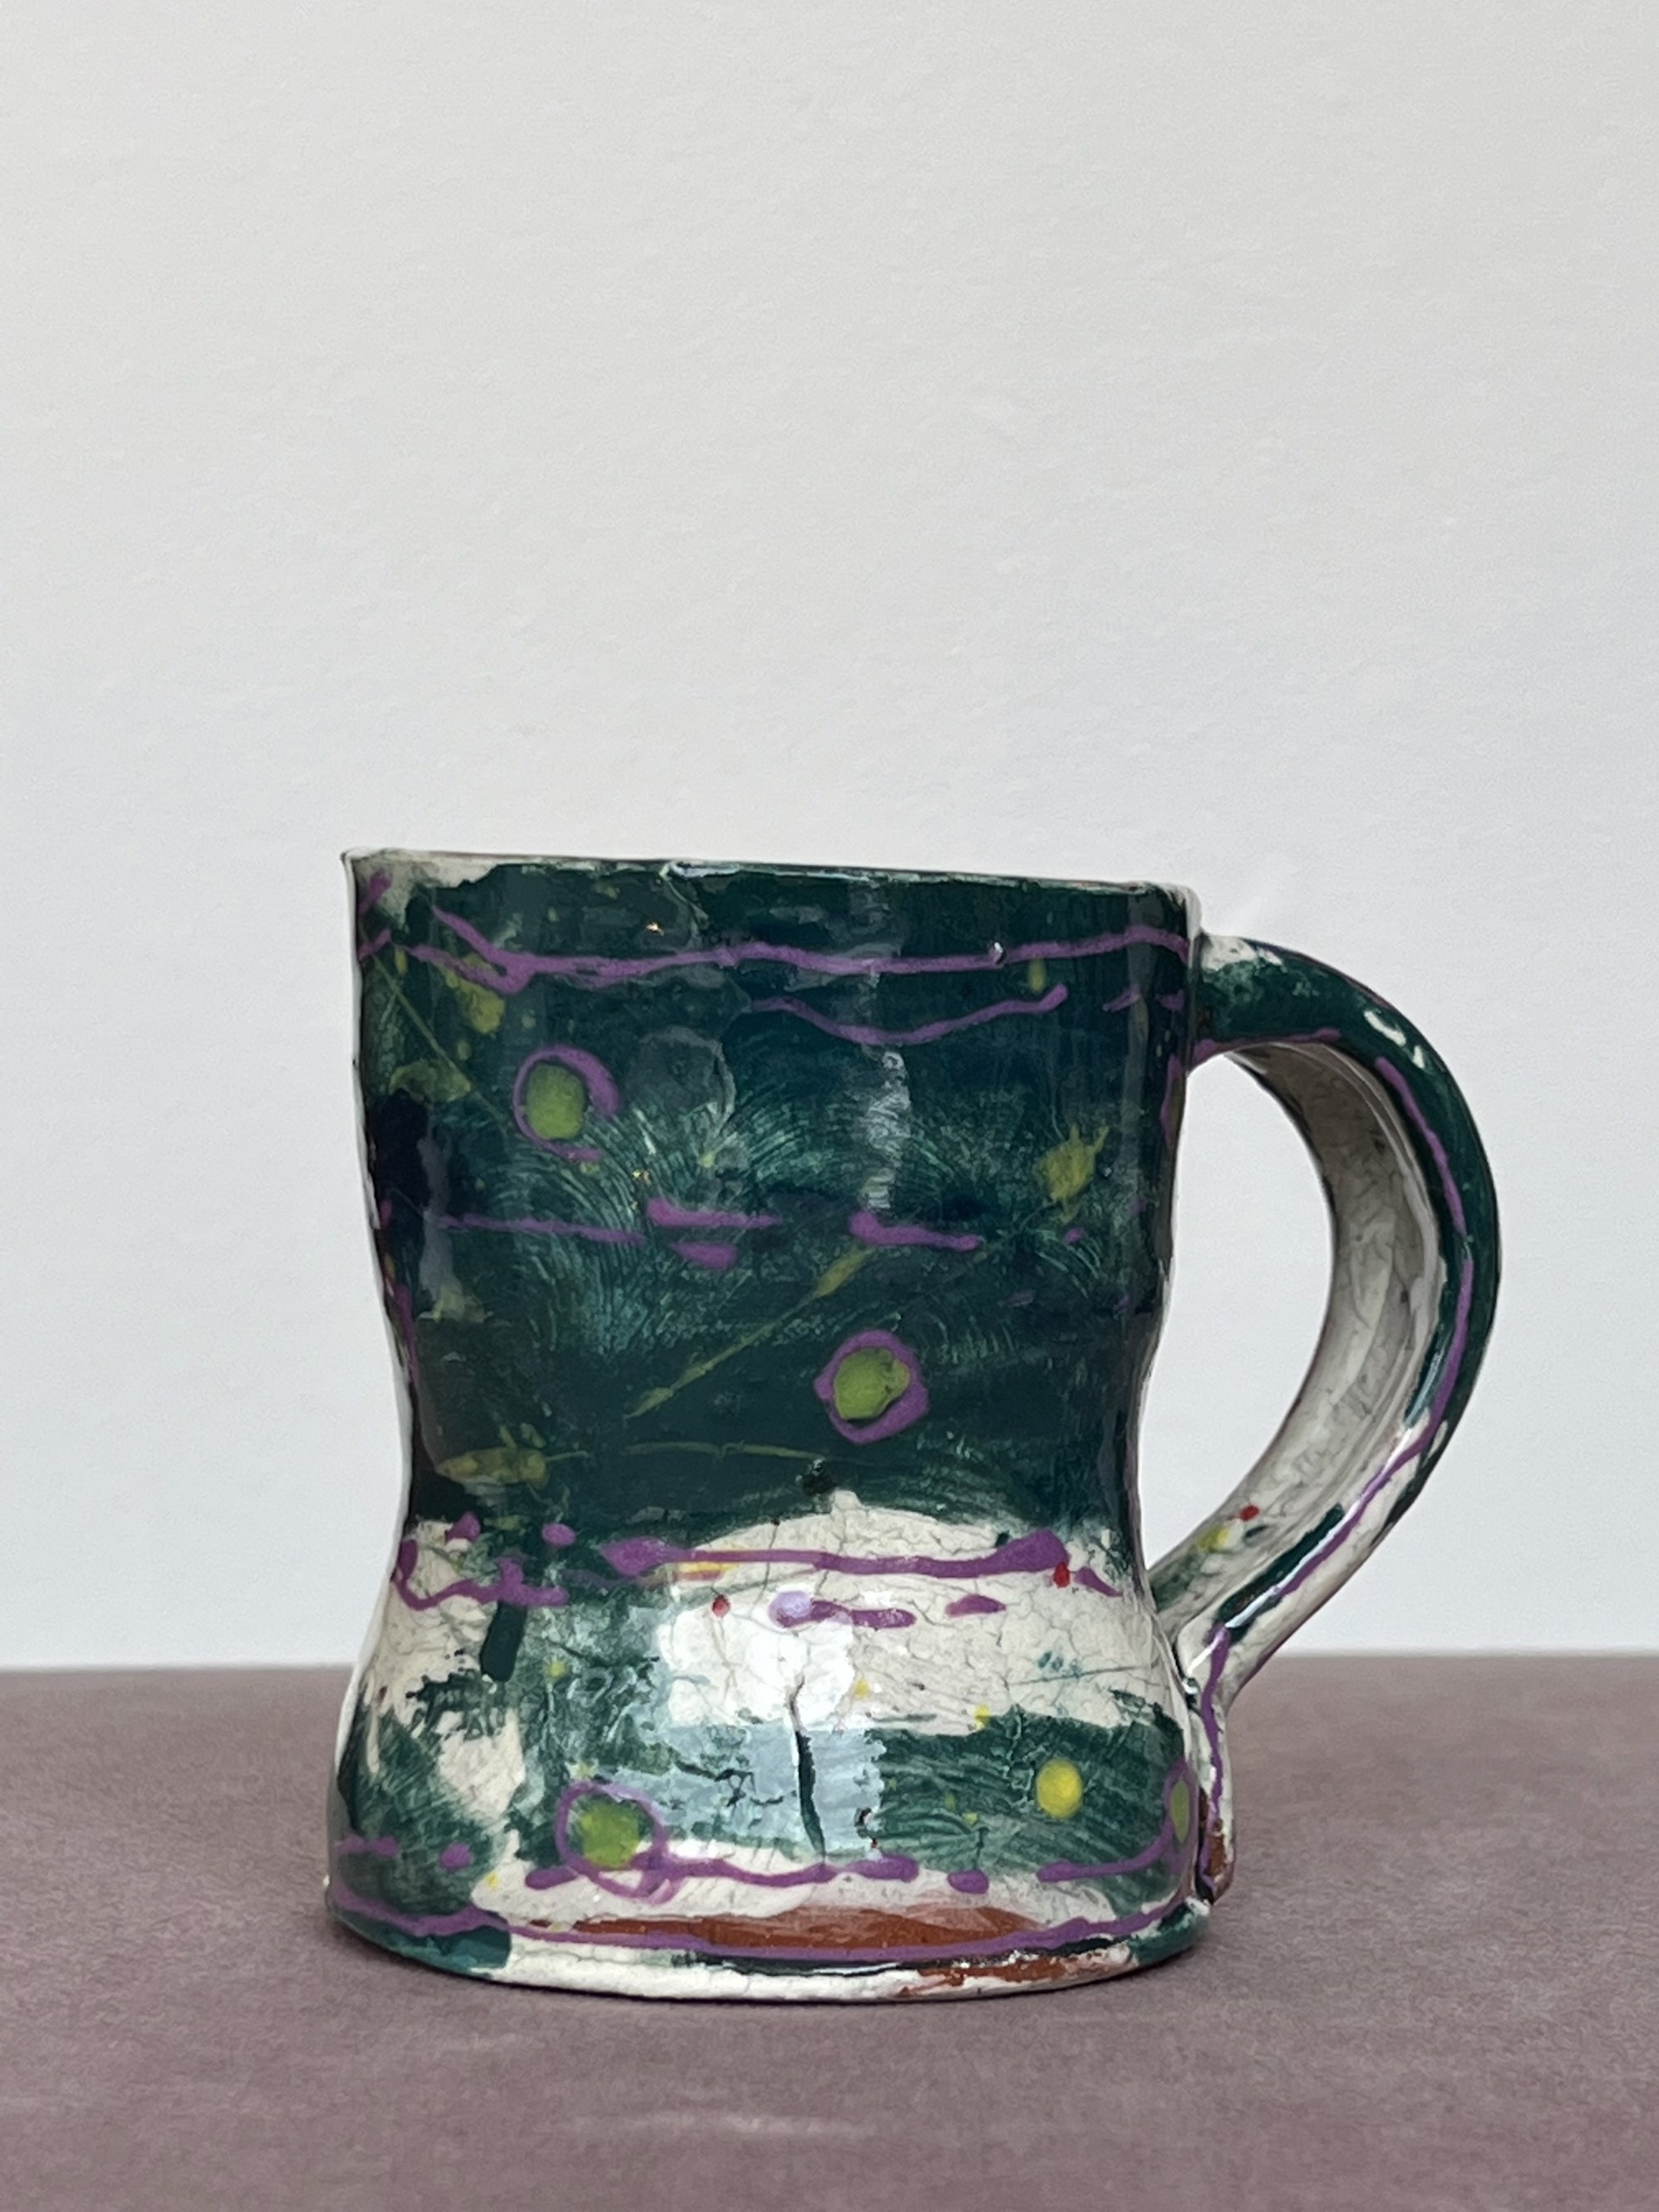 Teal & Purple Mug No. 2 by Susan McGilvrey